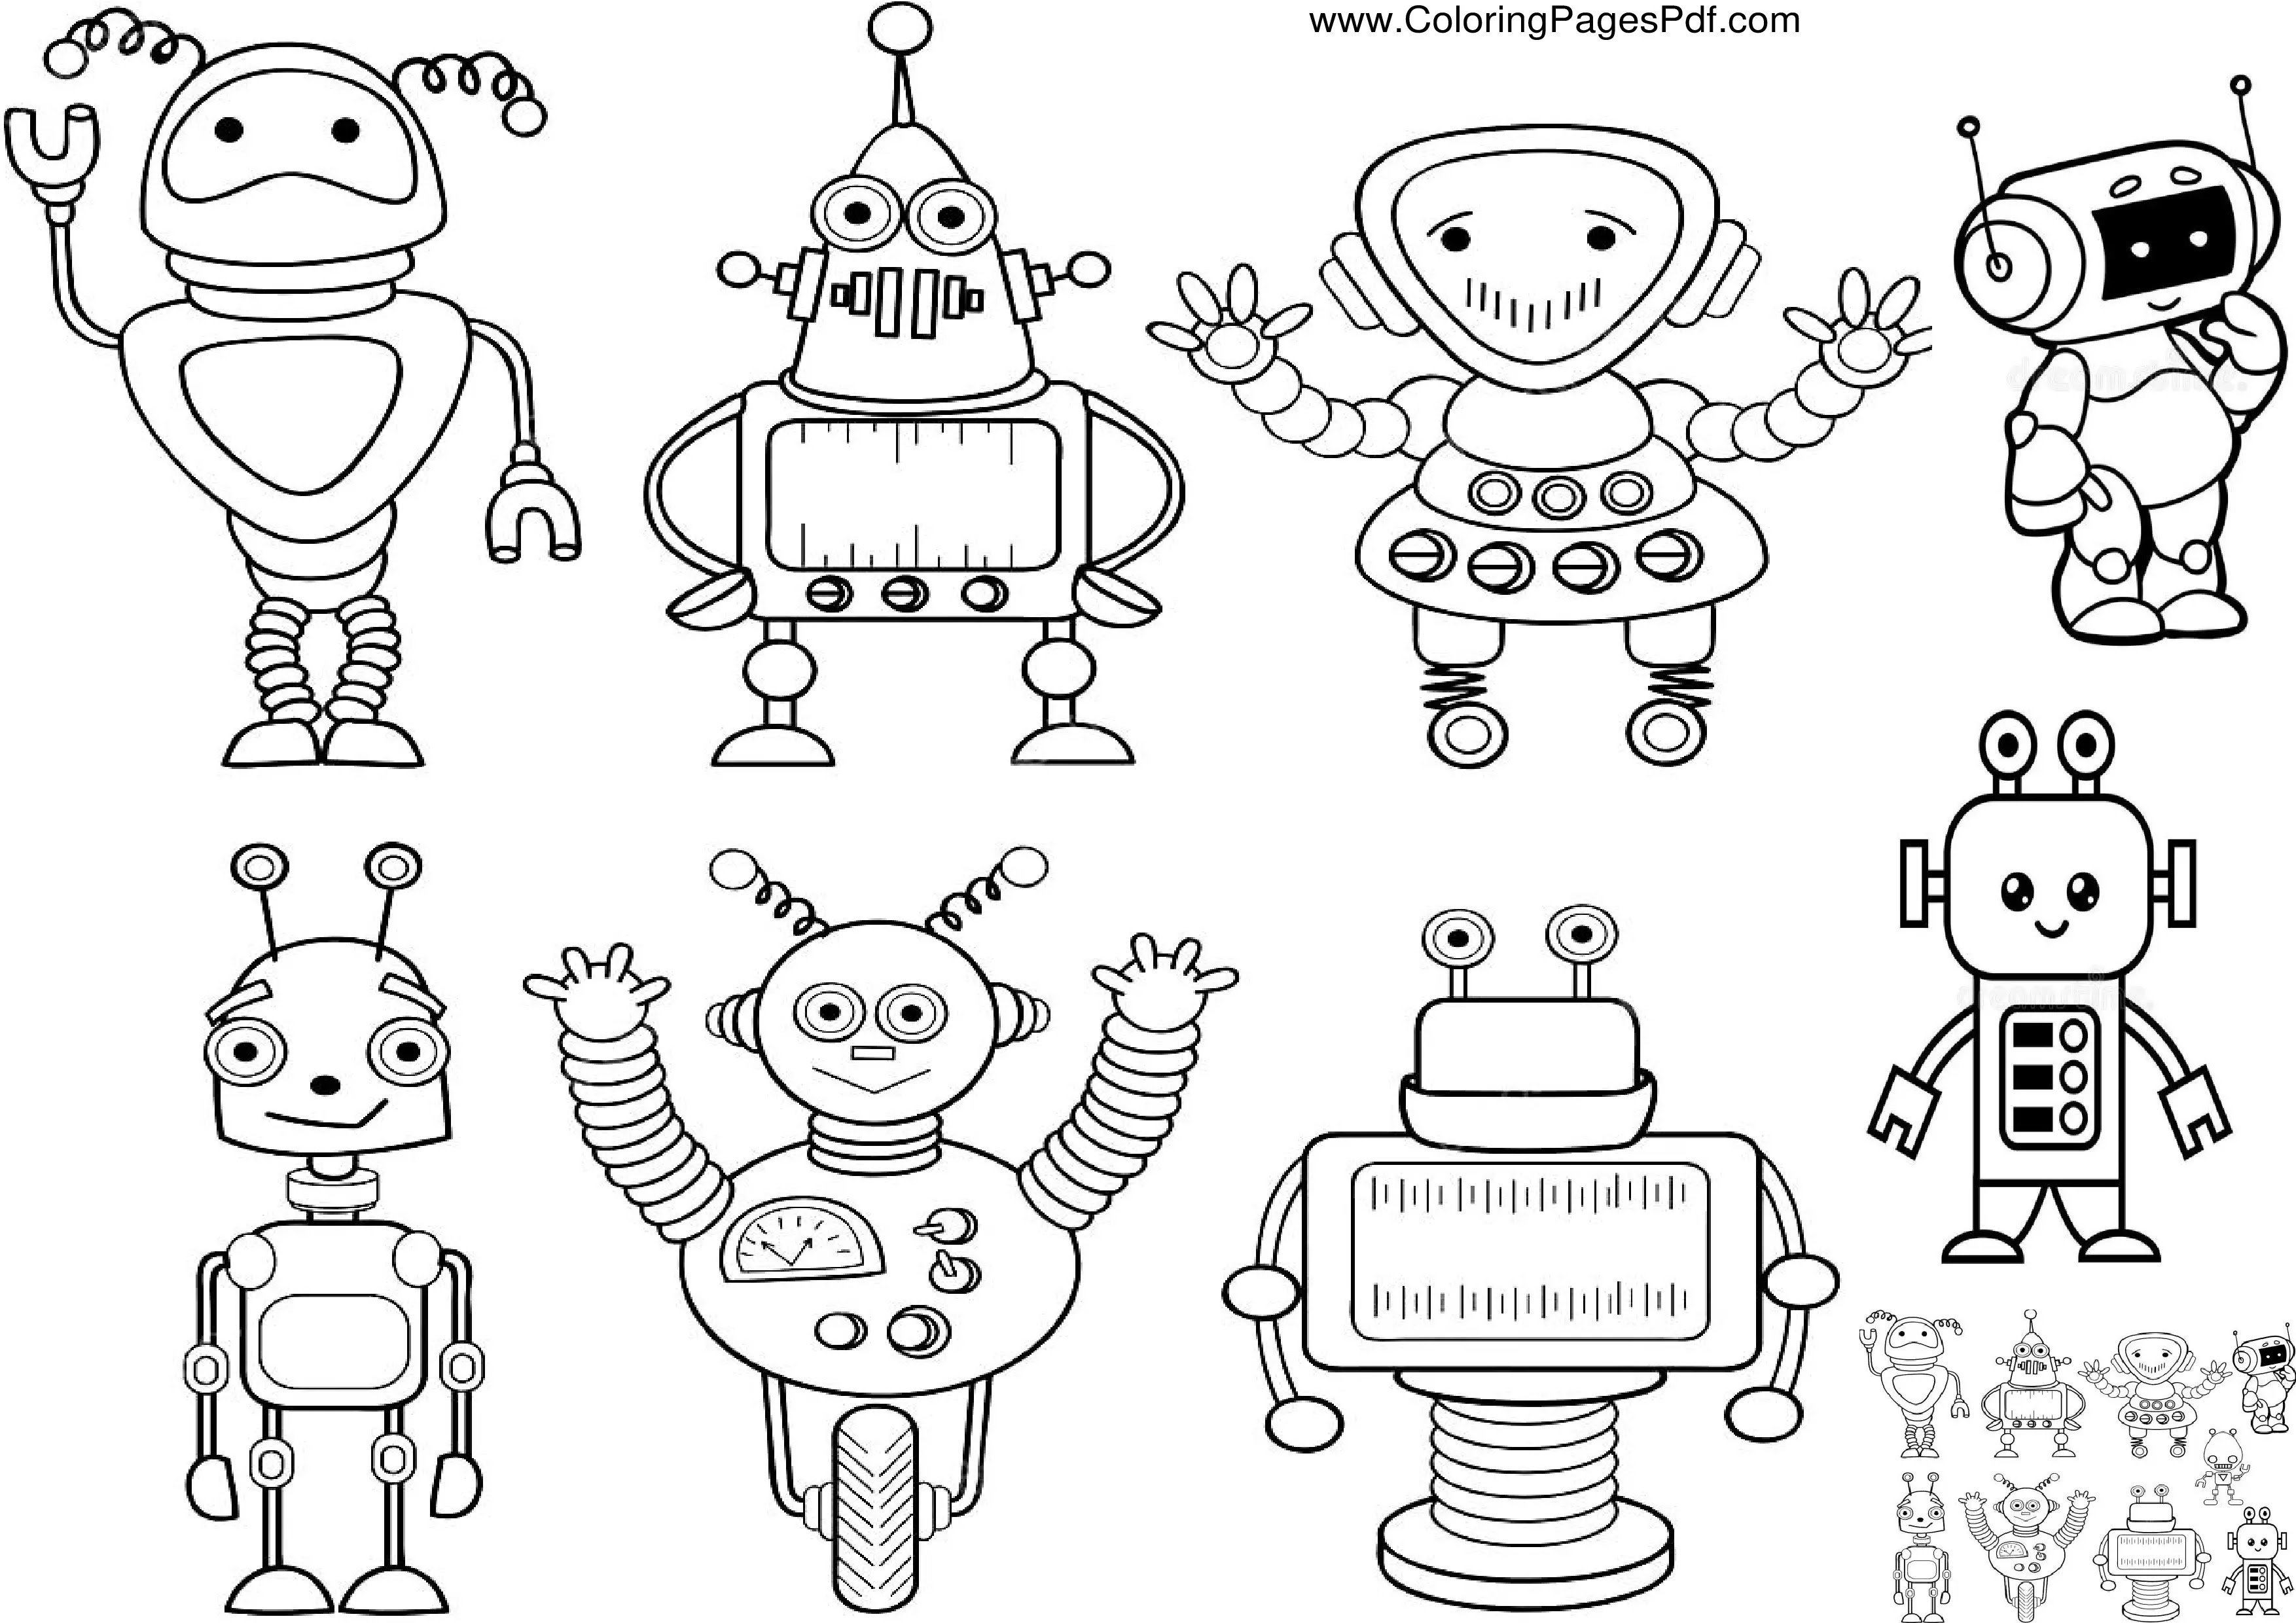 Robot coloring pages pdf